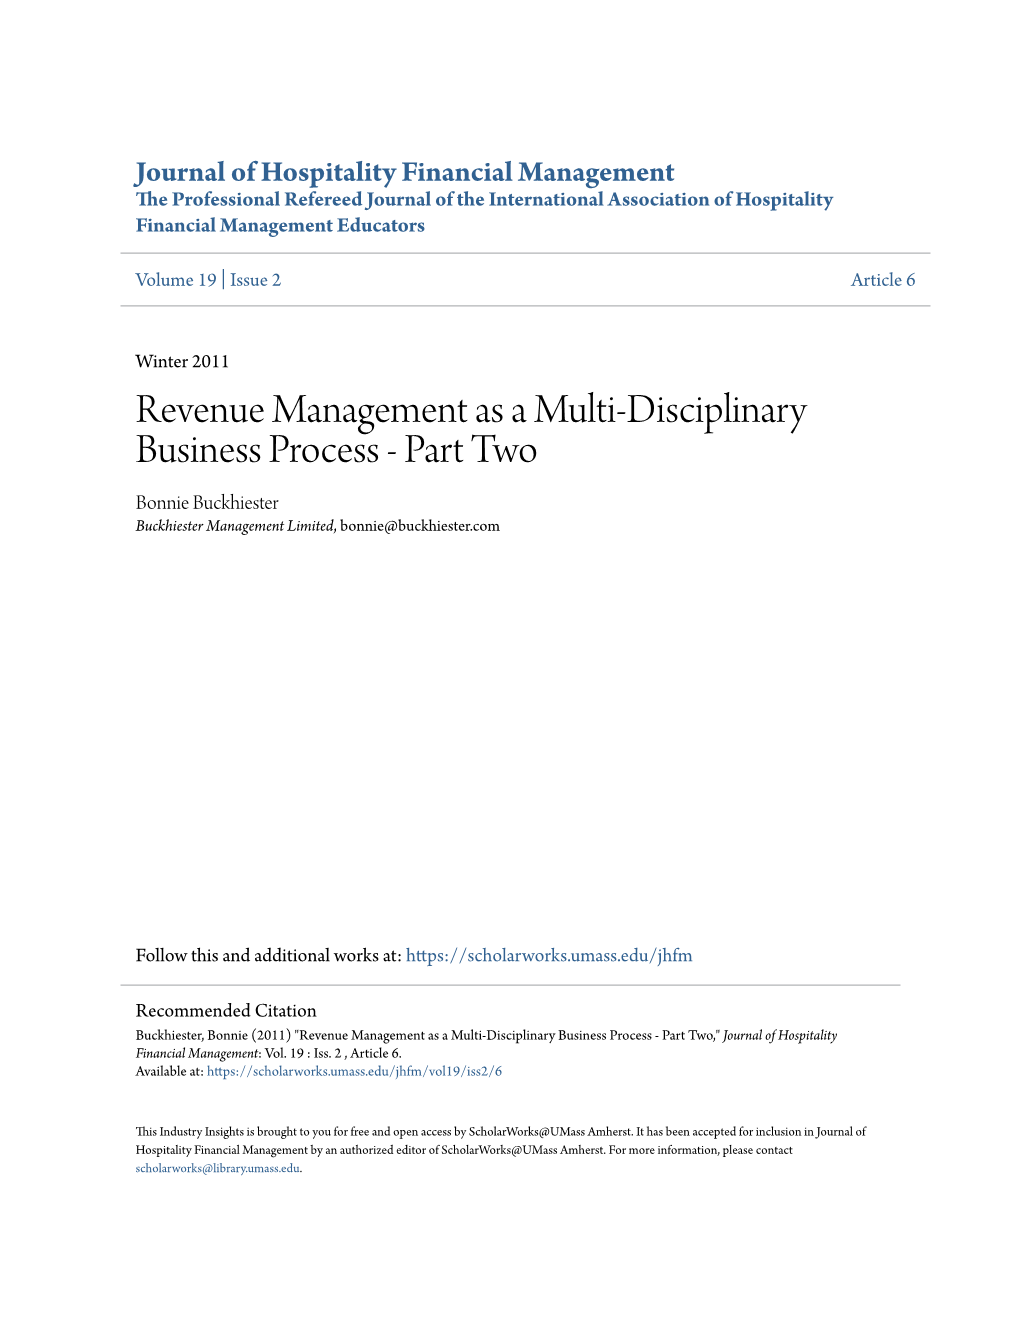 Revenue Management As a Multi-Disciplinary Business Process - Part Two Bonnie Buckhiester Buckhiester Management Limited, Bonnie@Buckhiester.Com